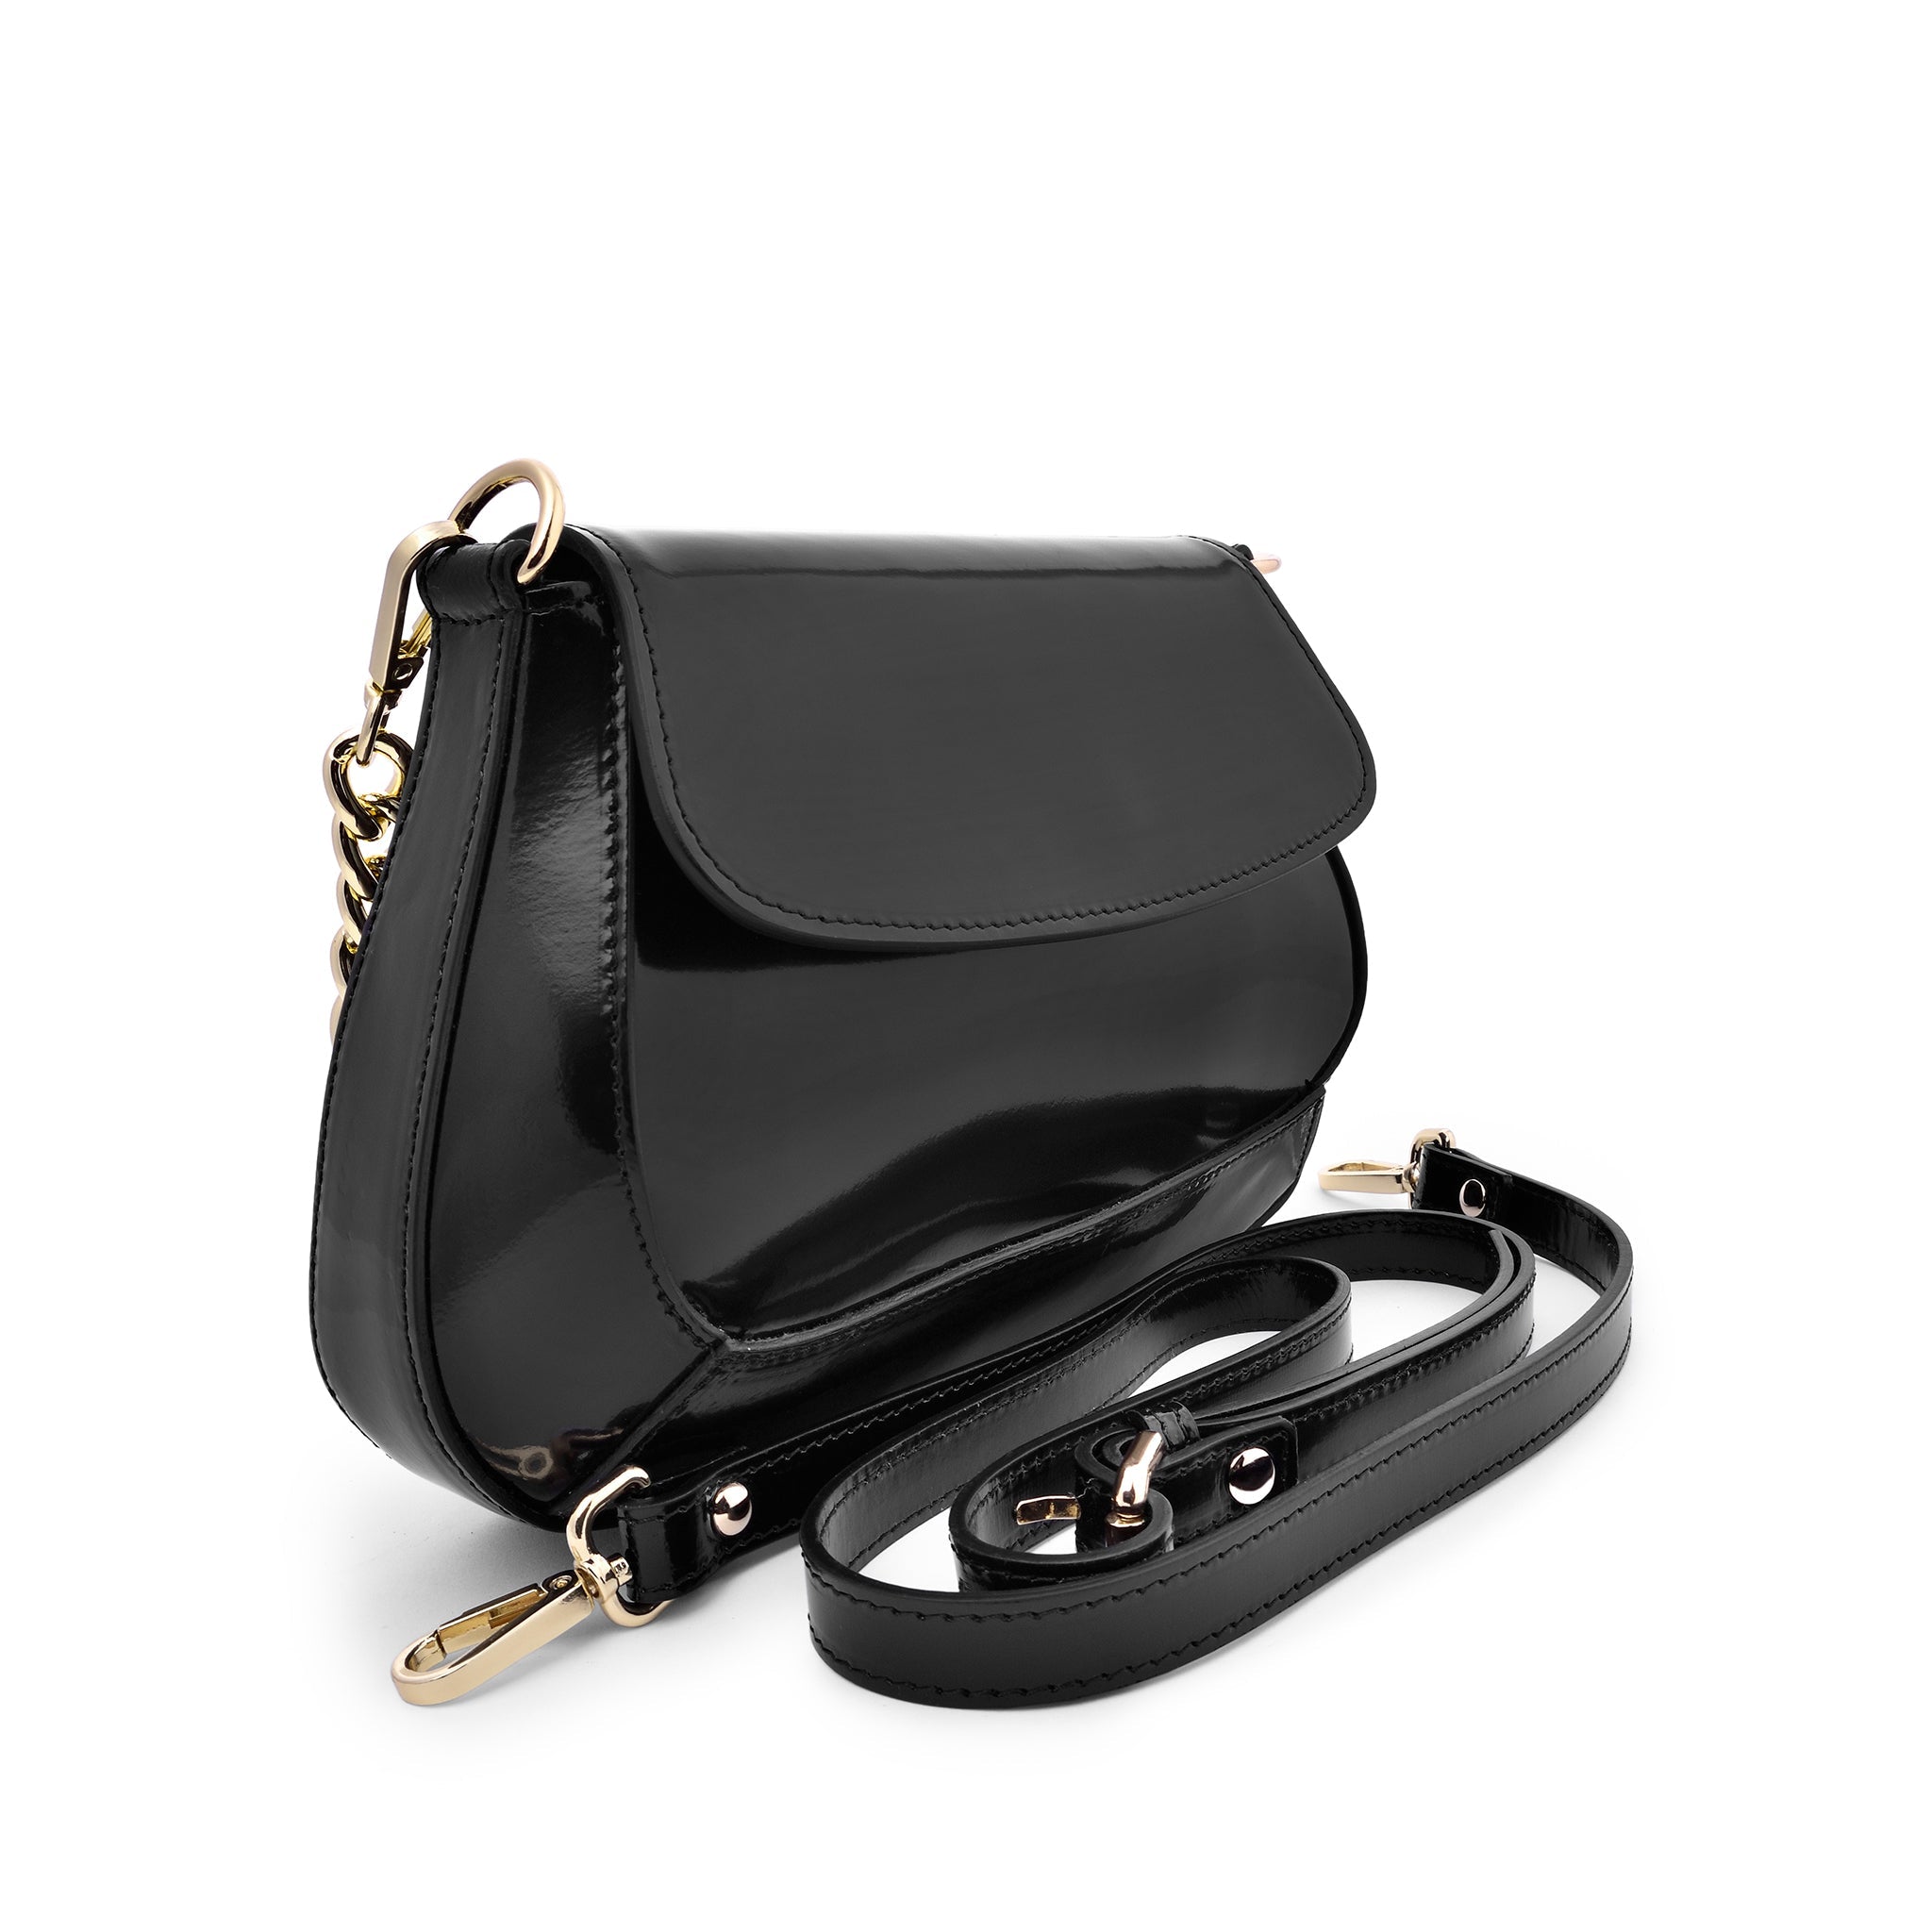 Ena Black Semi Patent Leather Shoulder Bag CL10534 NERO - 13